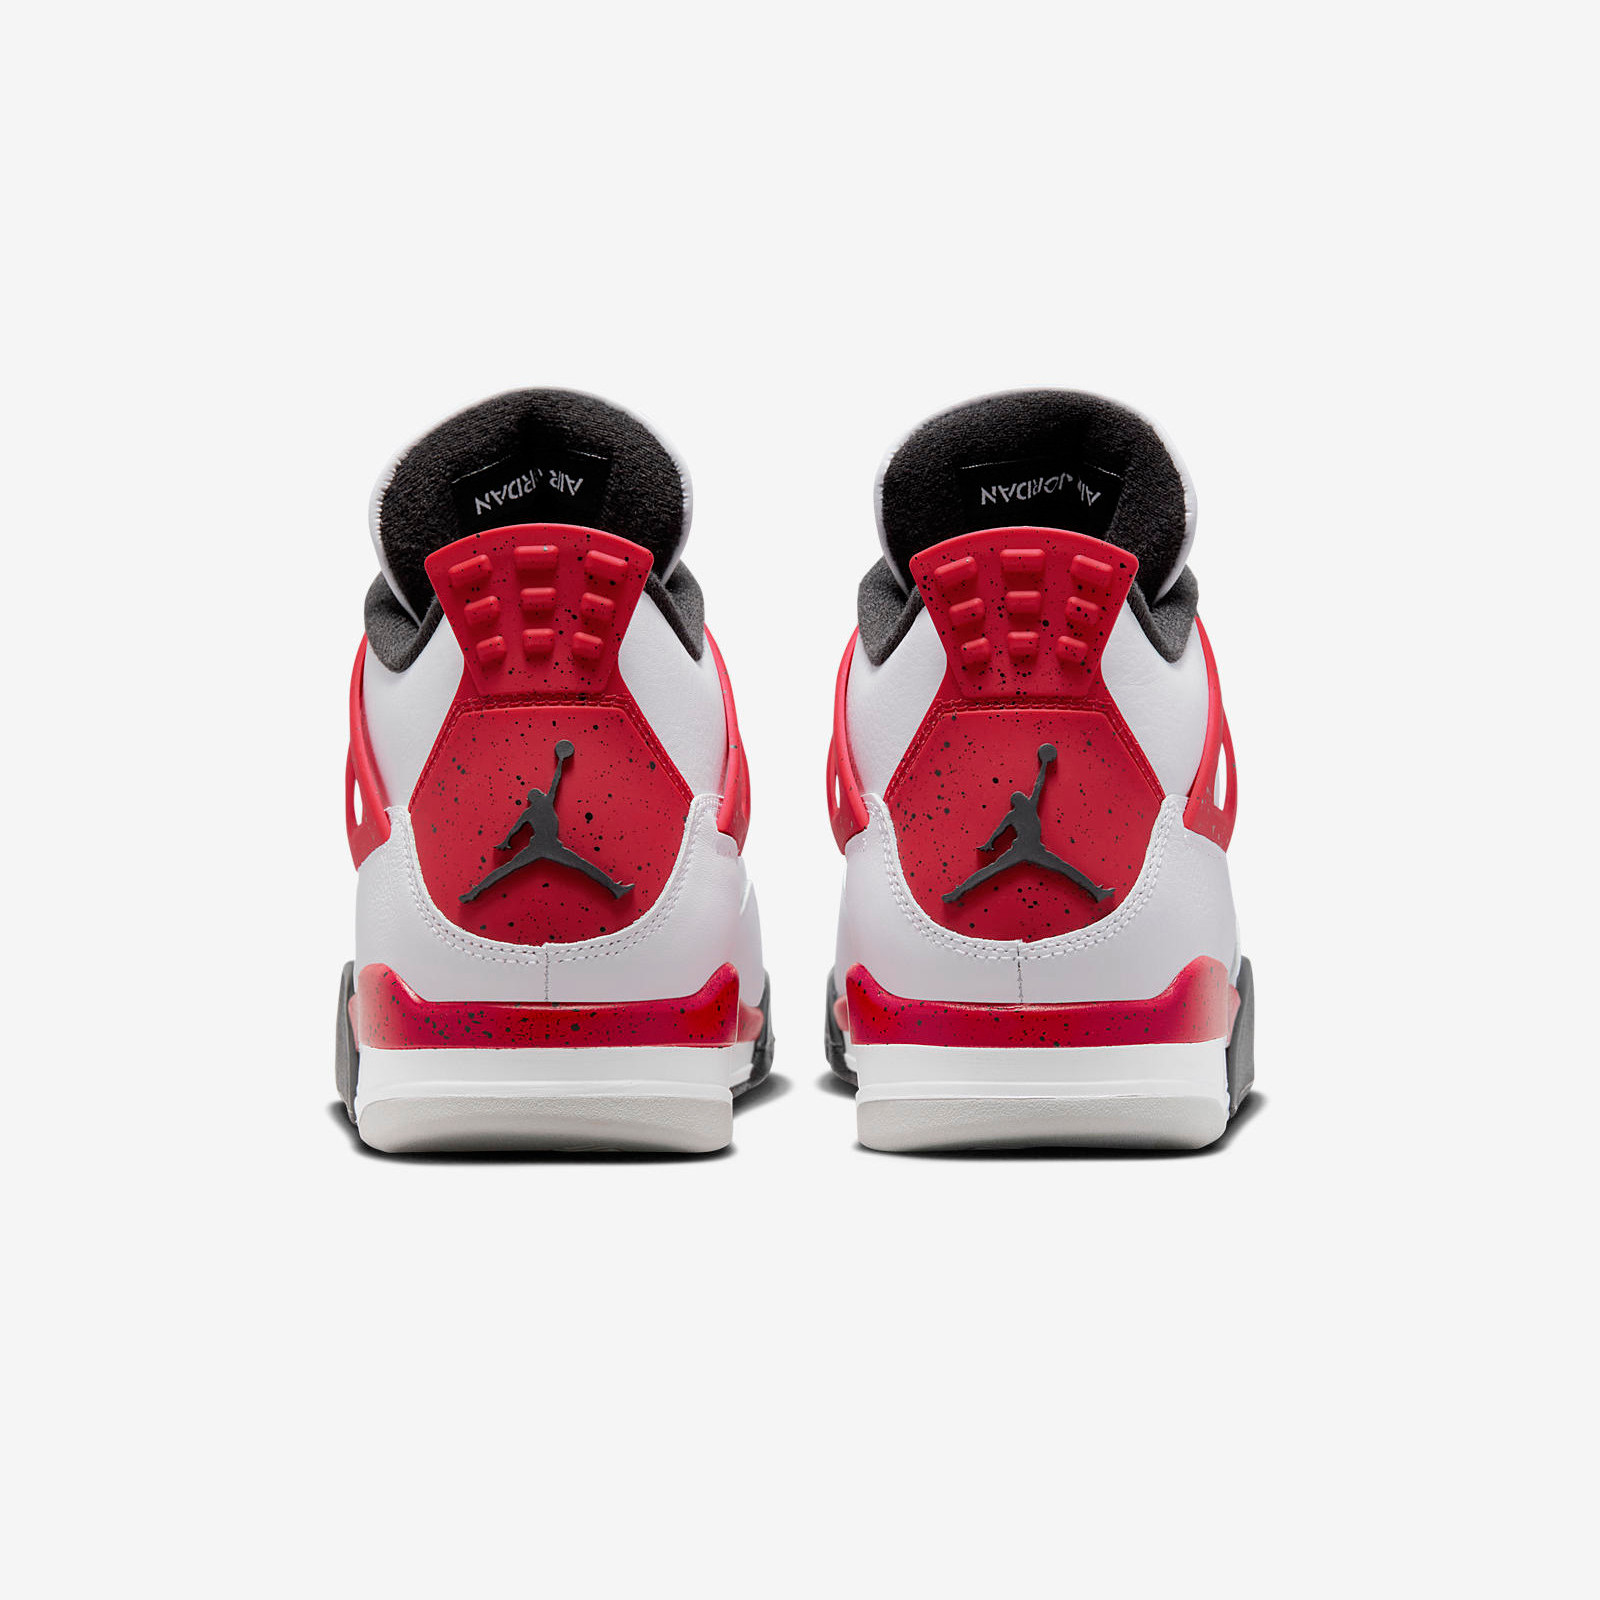 Air Jordan 4 Retro
« Red Cement »